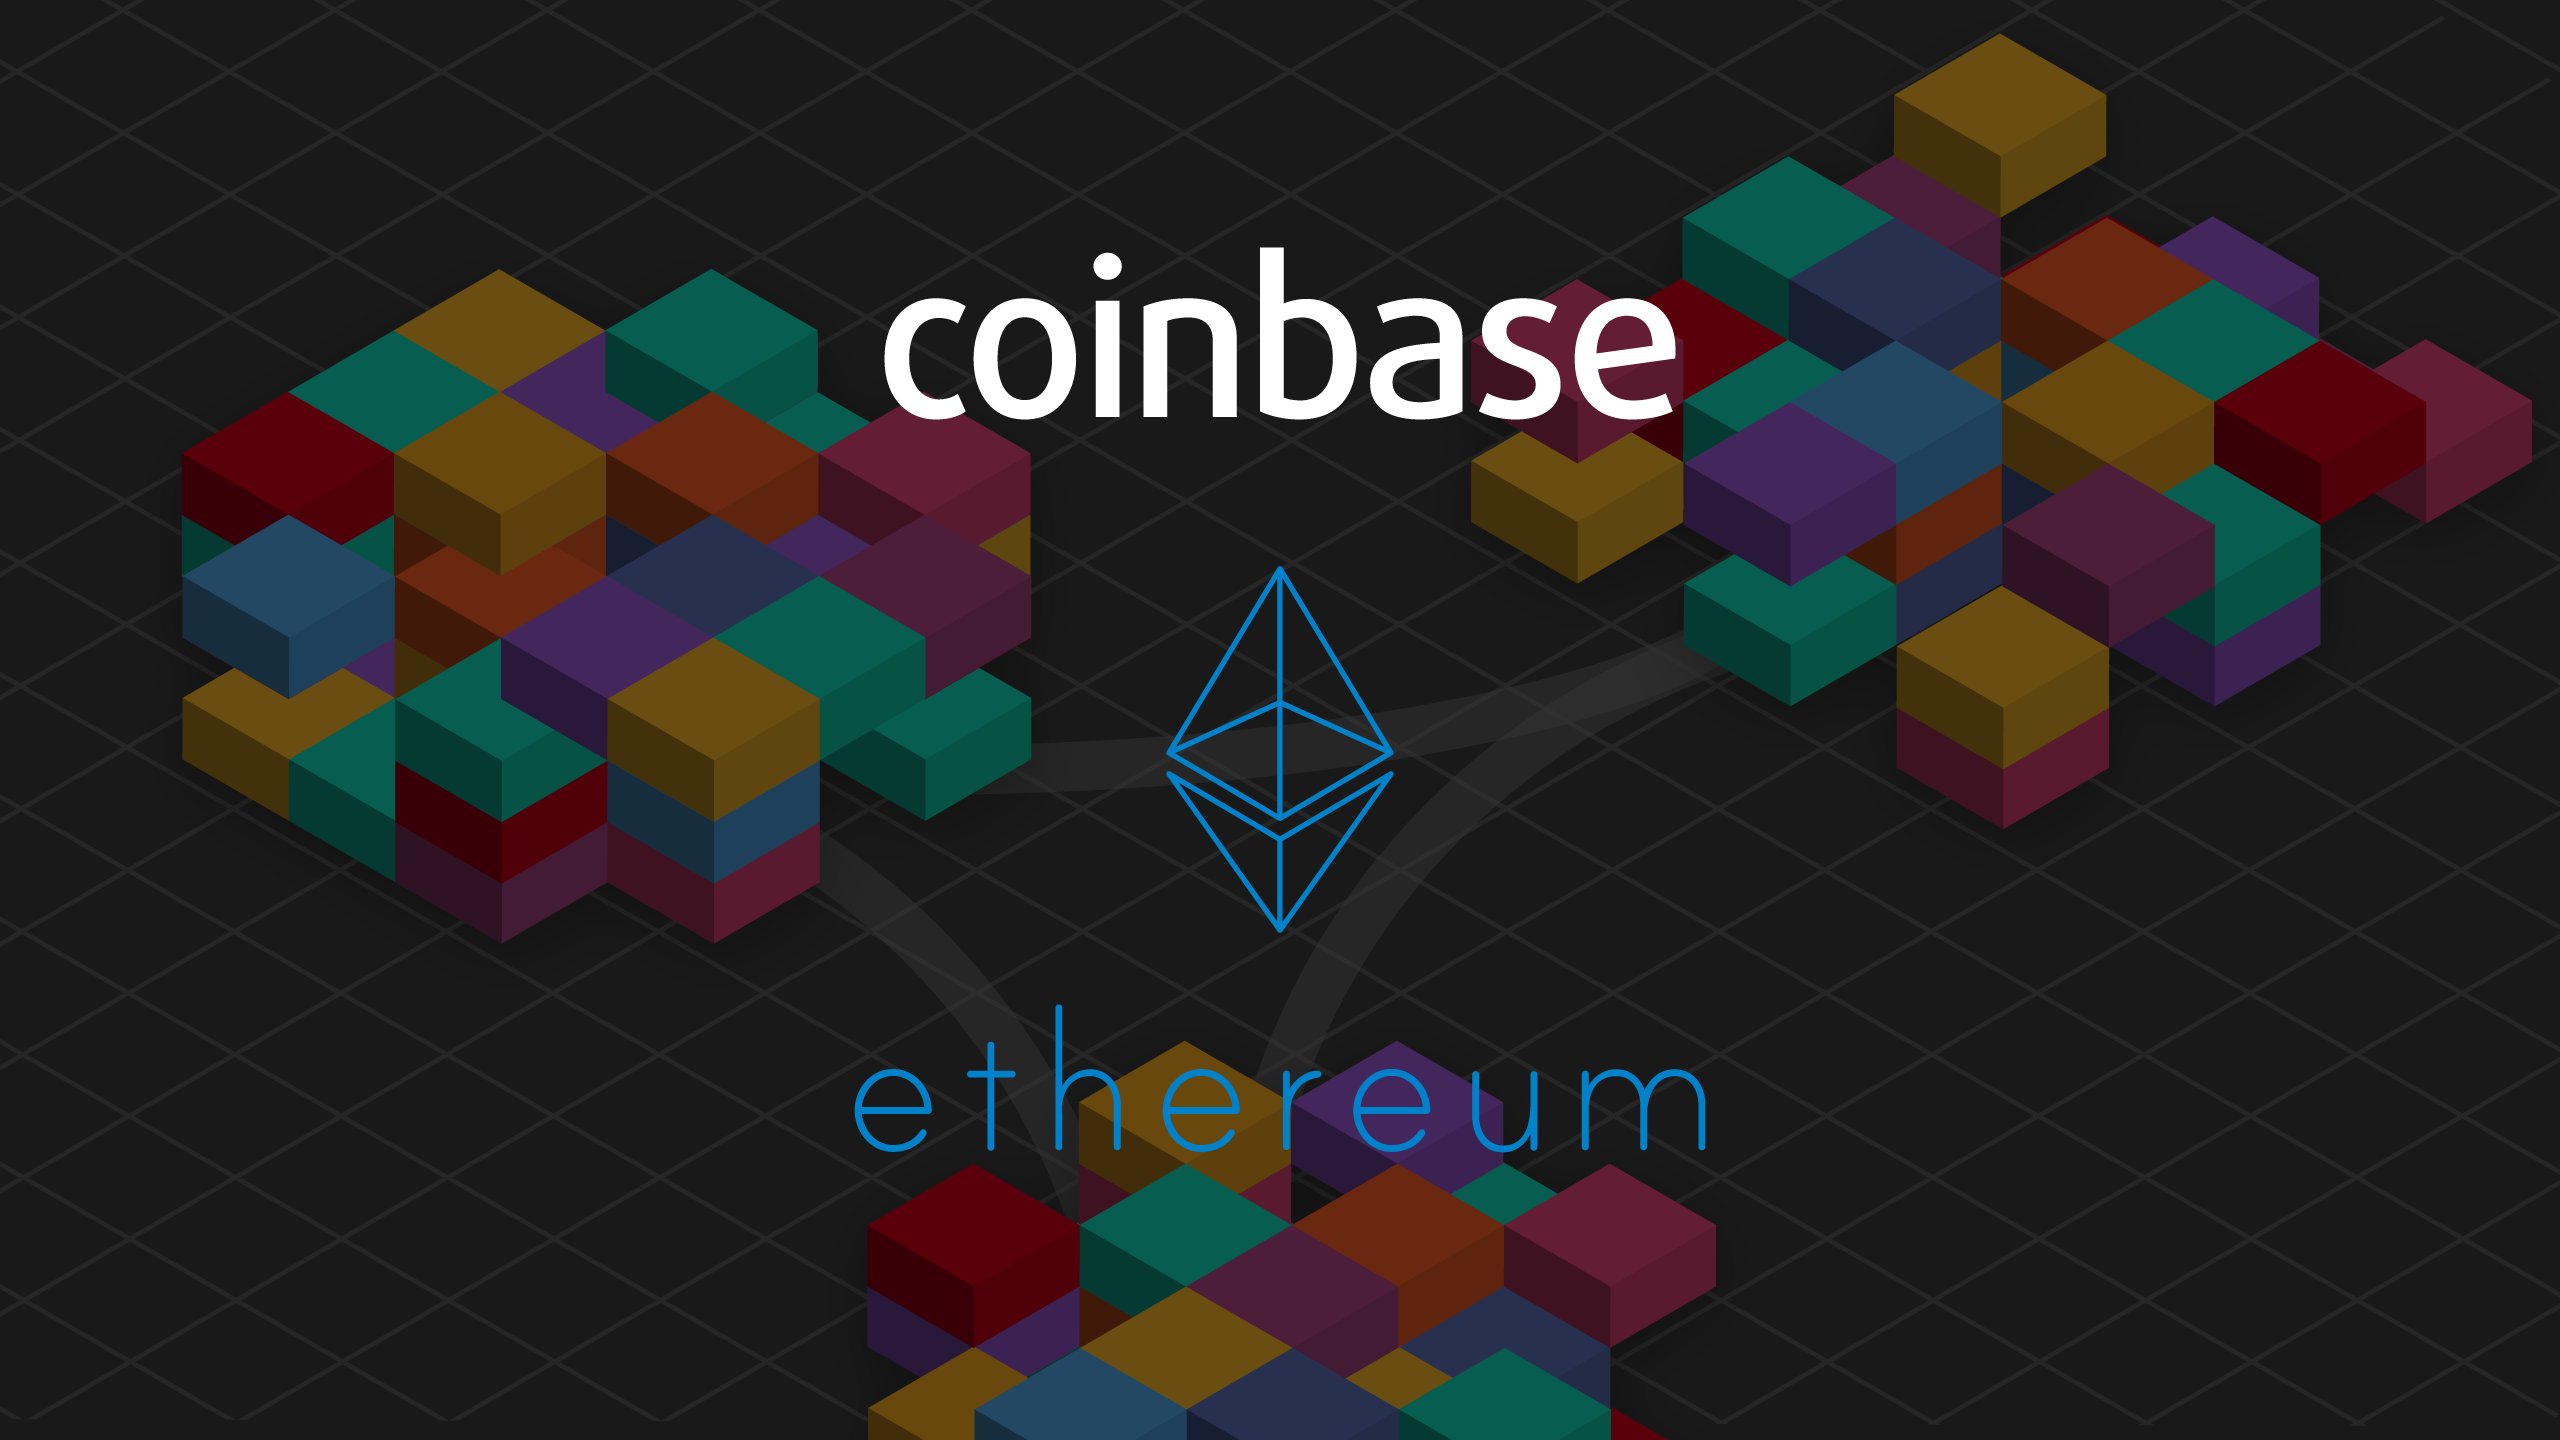 Coinbase ethereum 2016 биткоин выходной